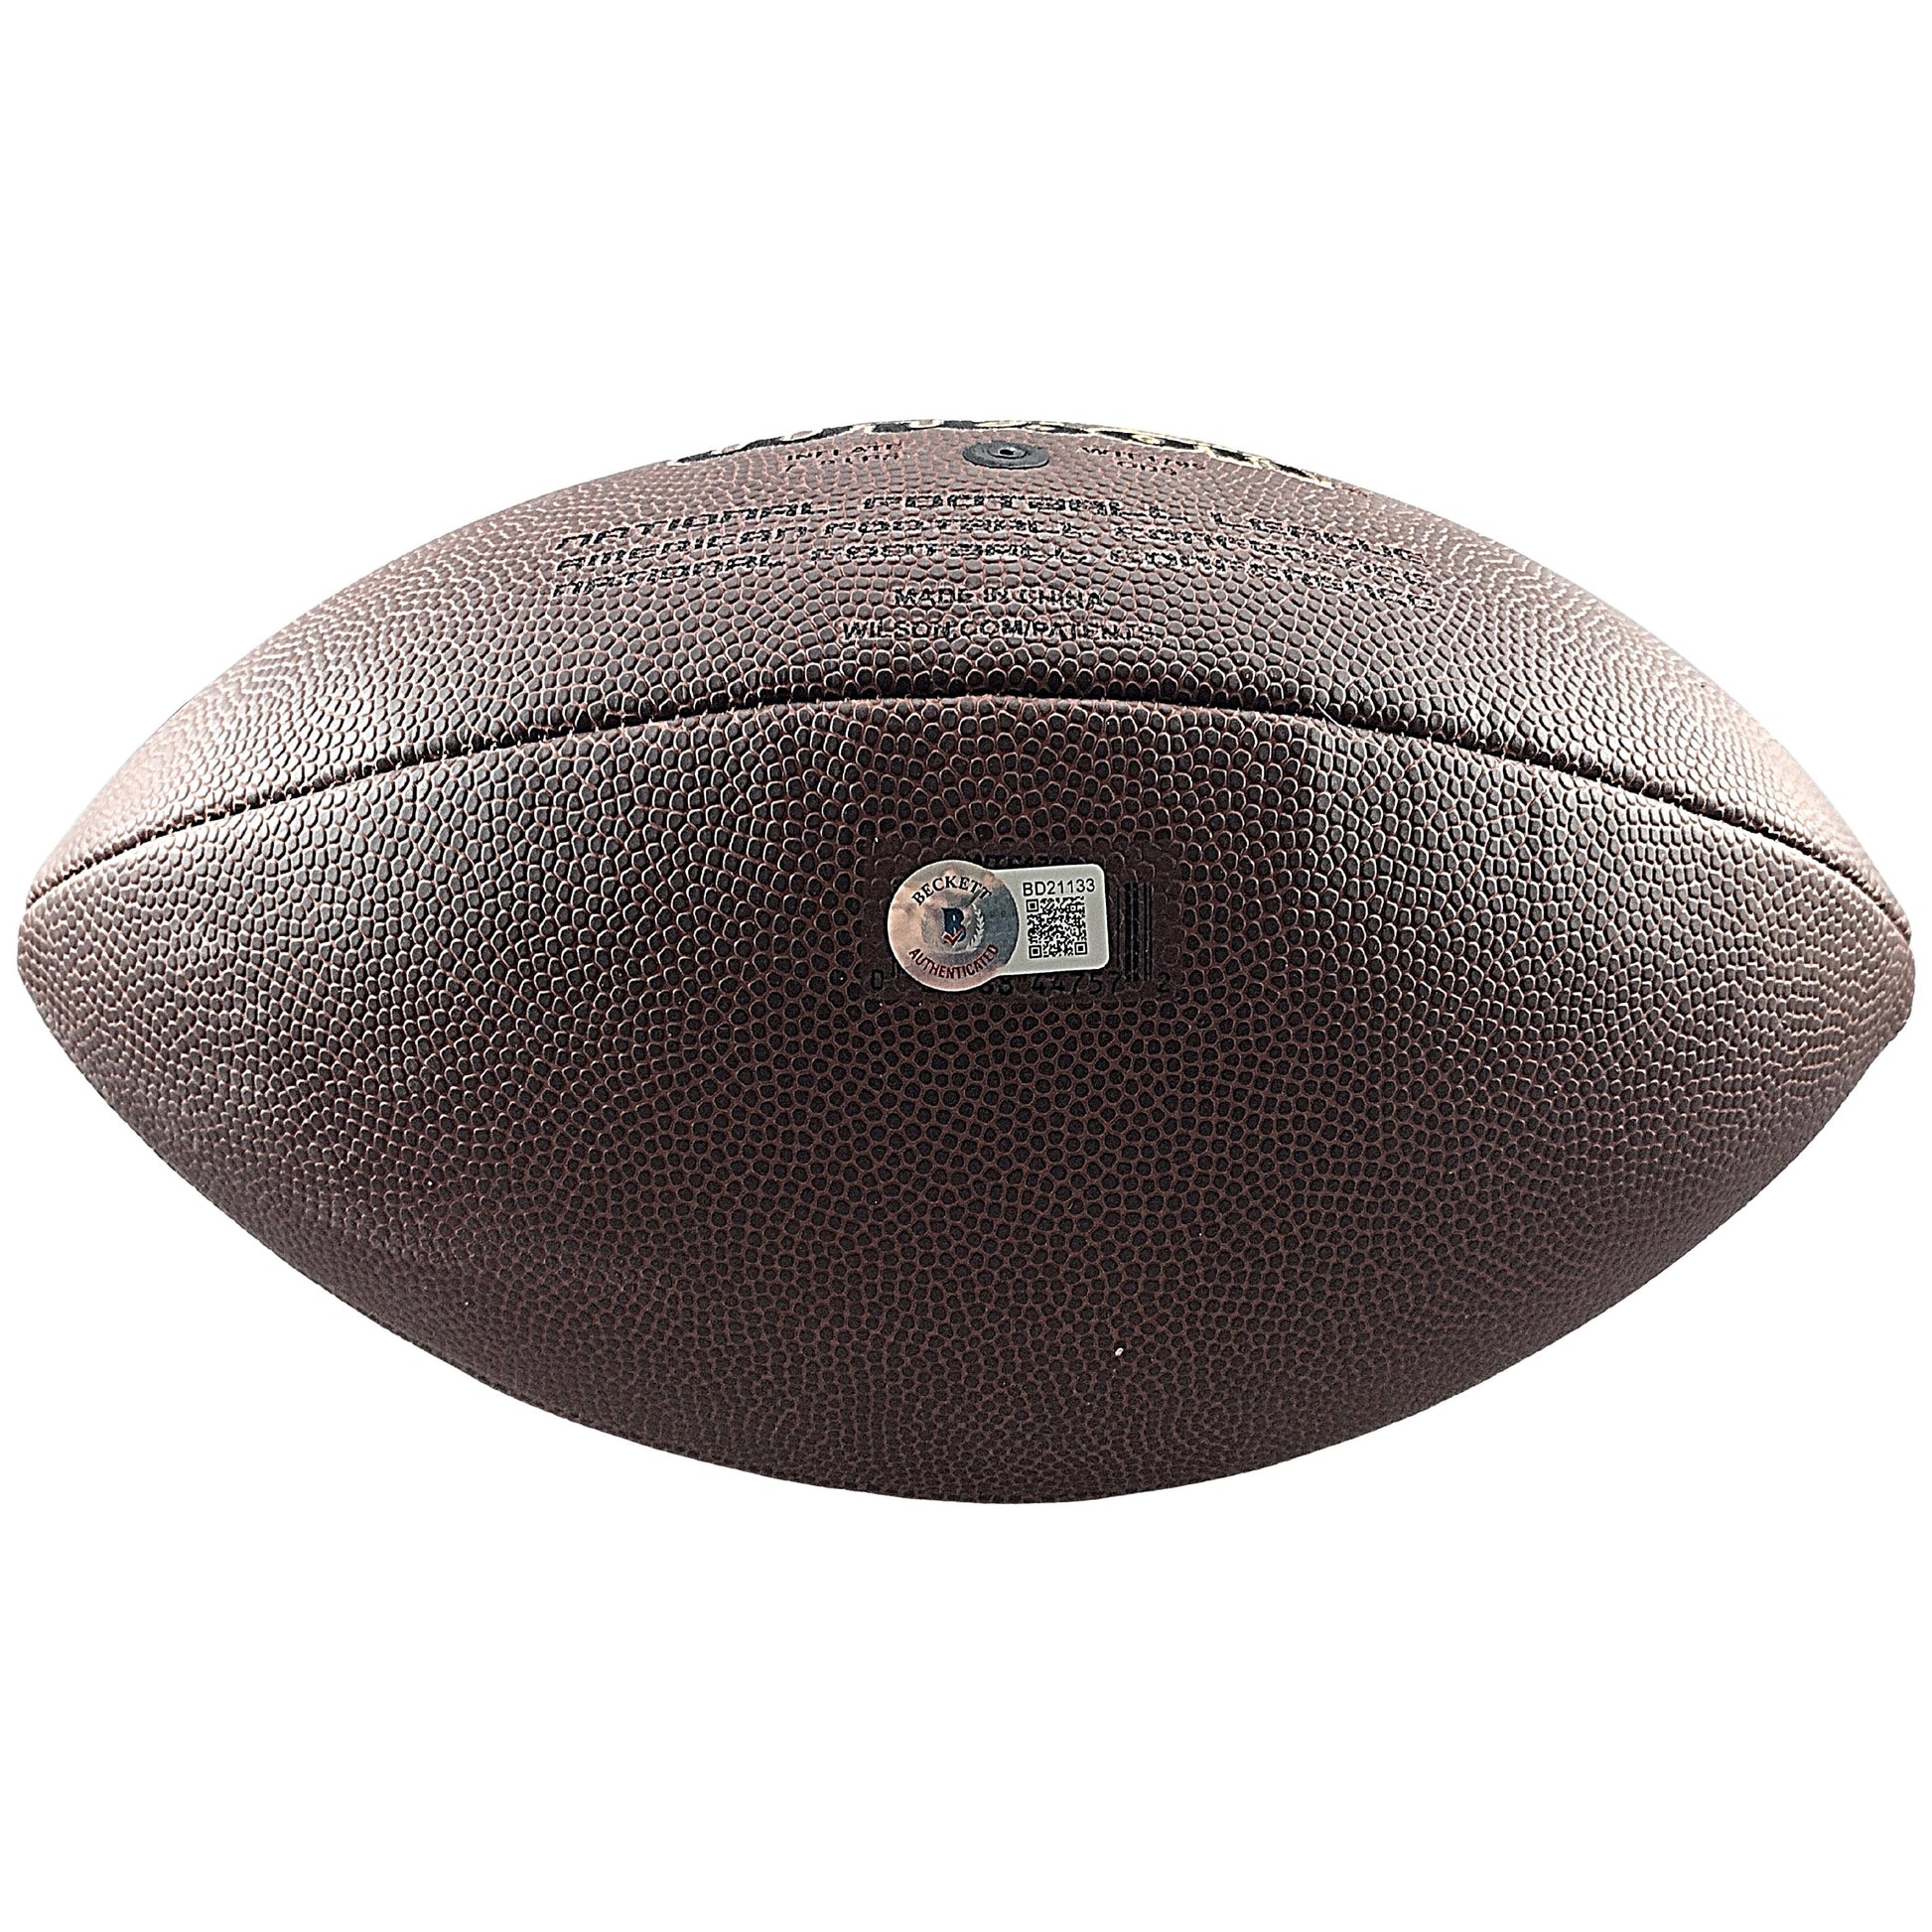 Footballs- Autographed- Shaquil Barrett Signed NFL Wilson Super Grip Football Beckett BAS Authentication 205